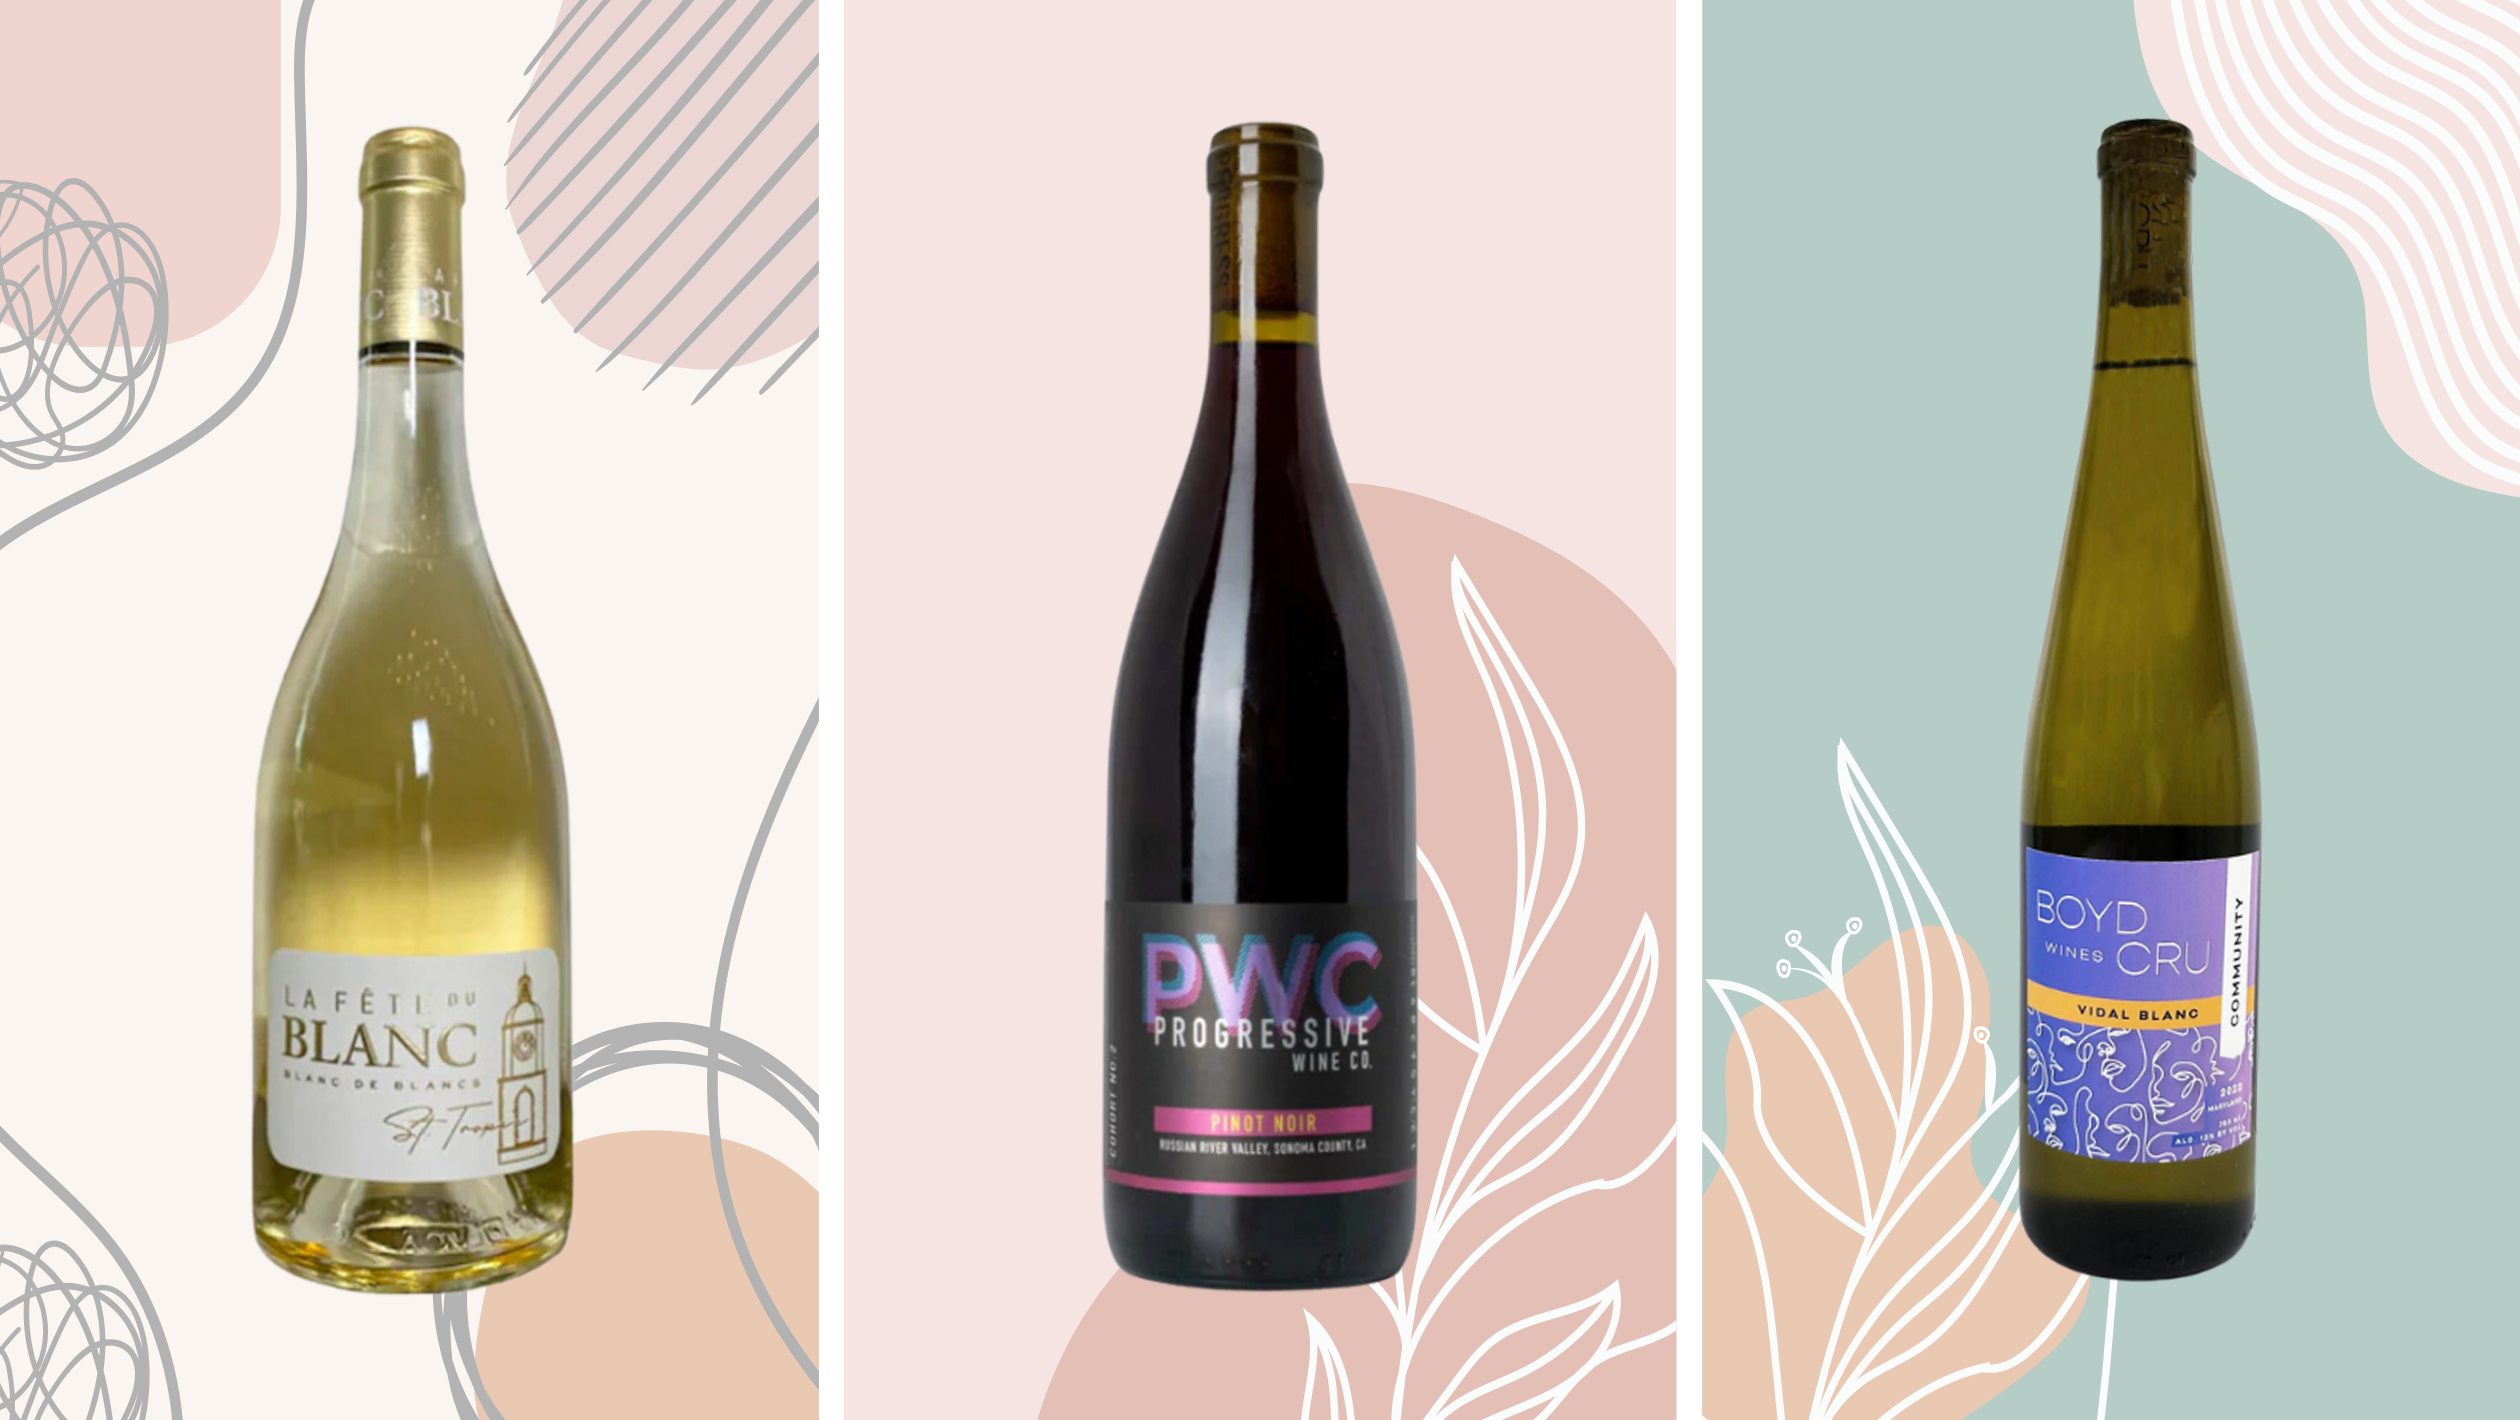 From left to right: La Fête du Blanc 2021, Progressive Wine Co. Pinot Noir 2022, and Boyd Cru Wines ‘Community’ Vidal Blanc 2022. Photos courtesy of Urban Grape.